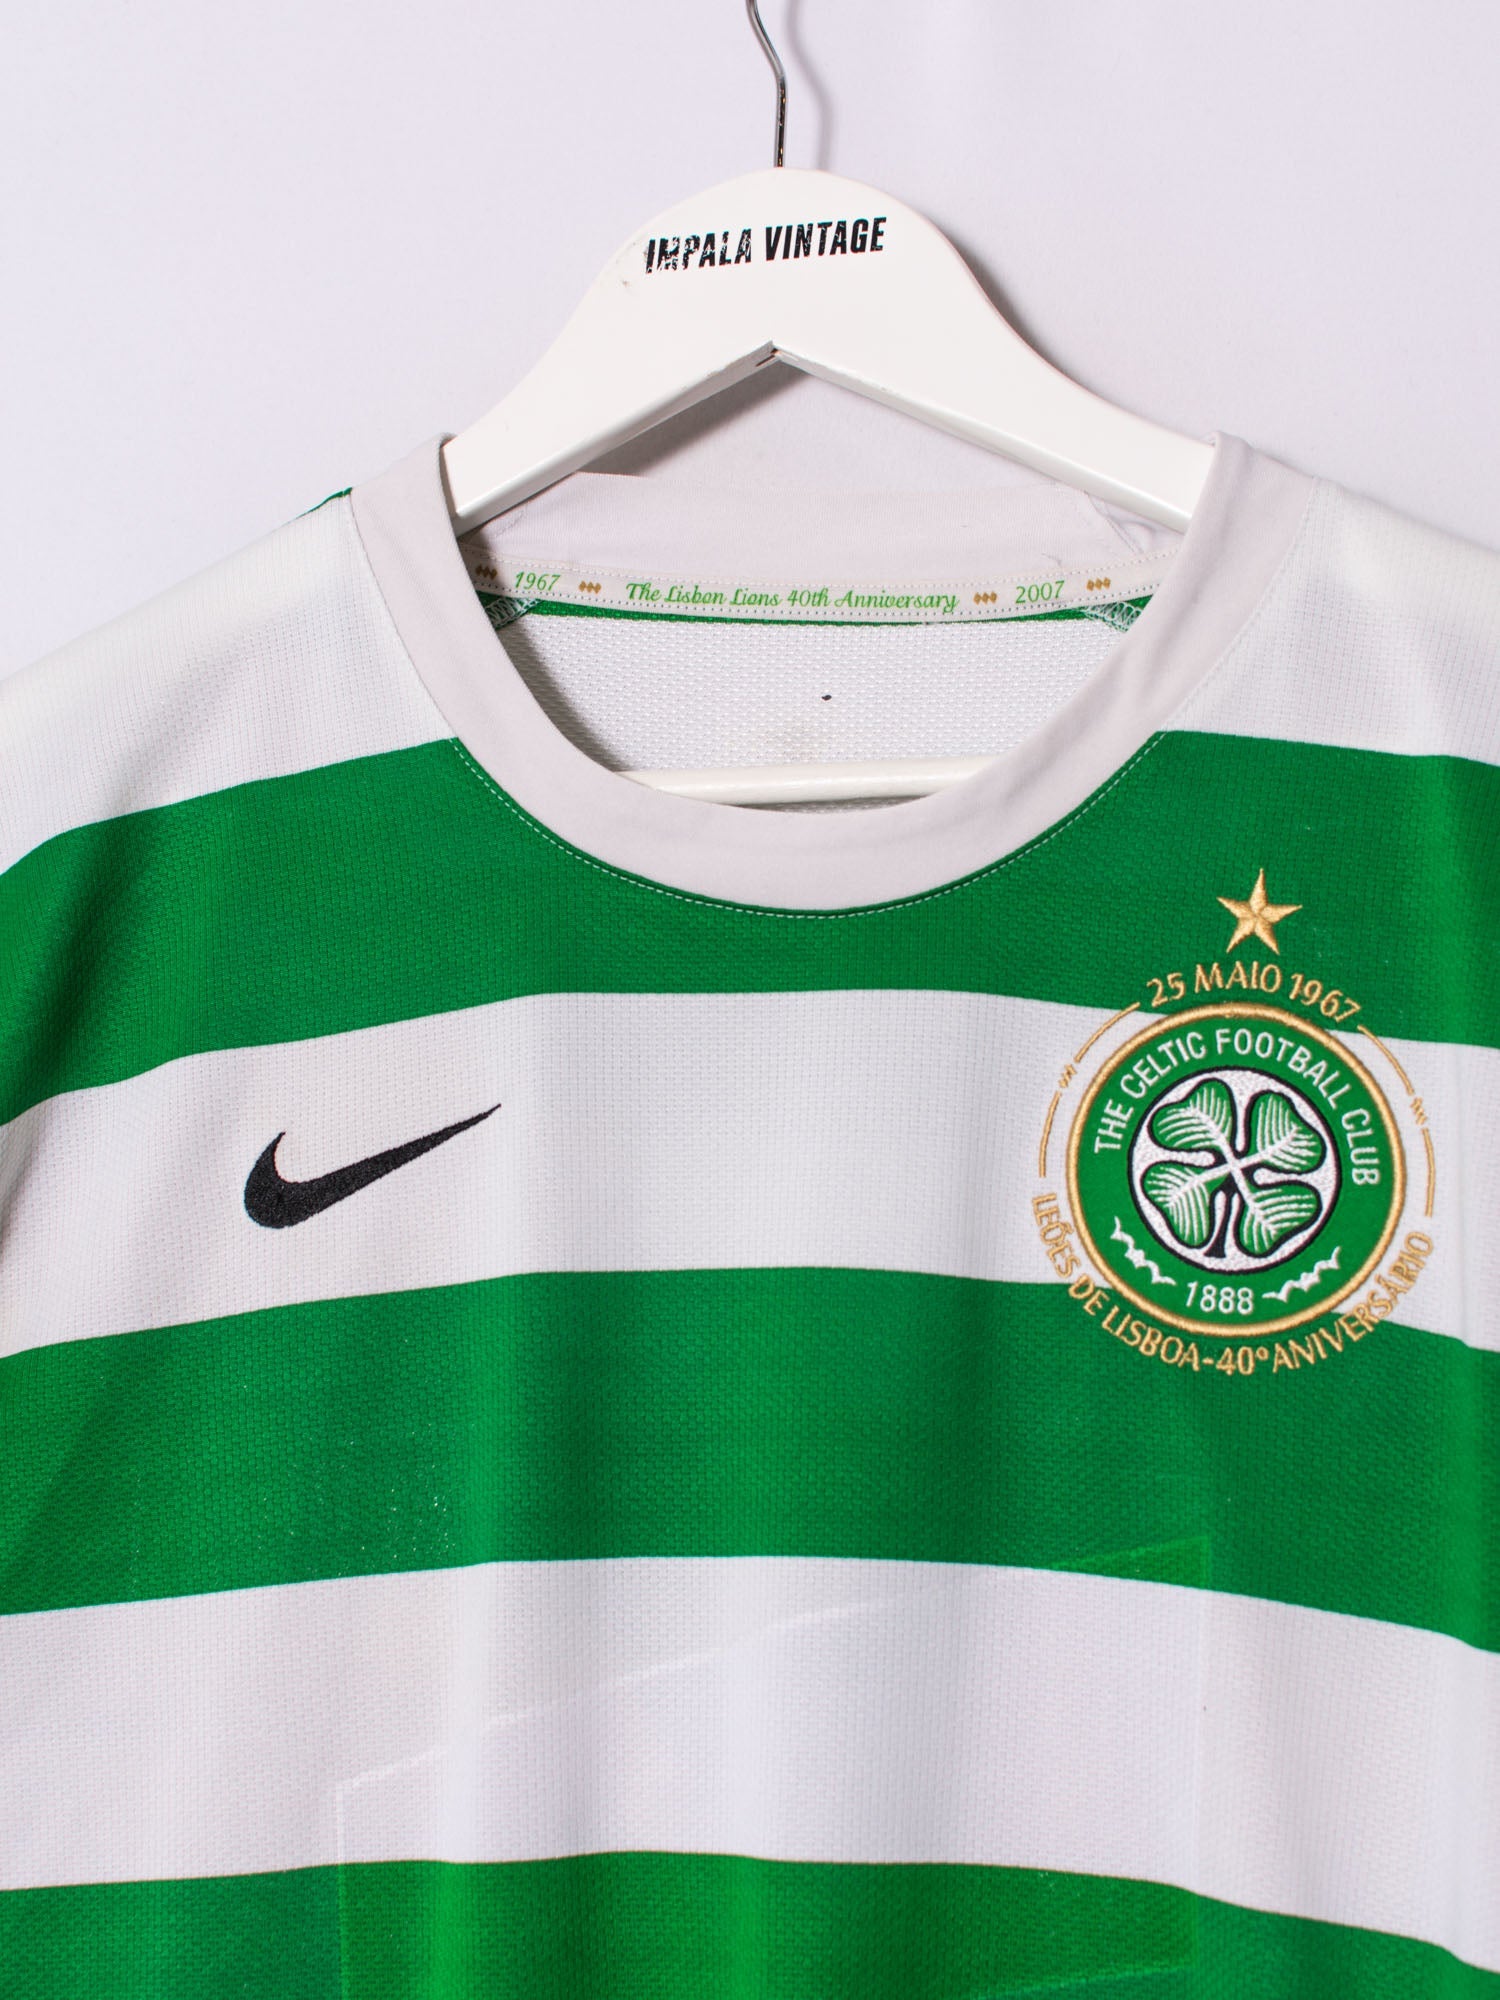 The Lisbon Lions 40th Anniversary Celtic Shirt 2007-2008